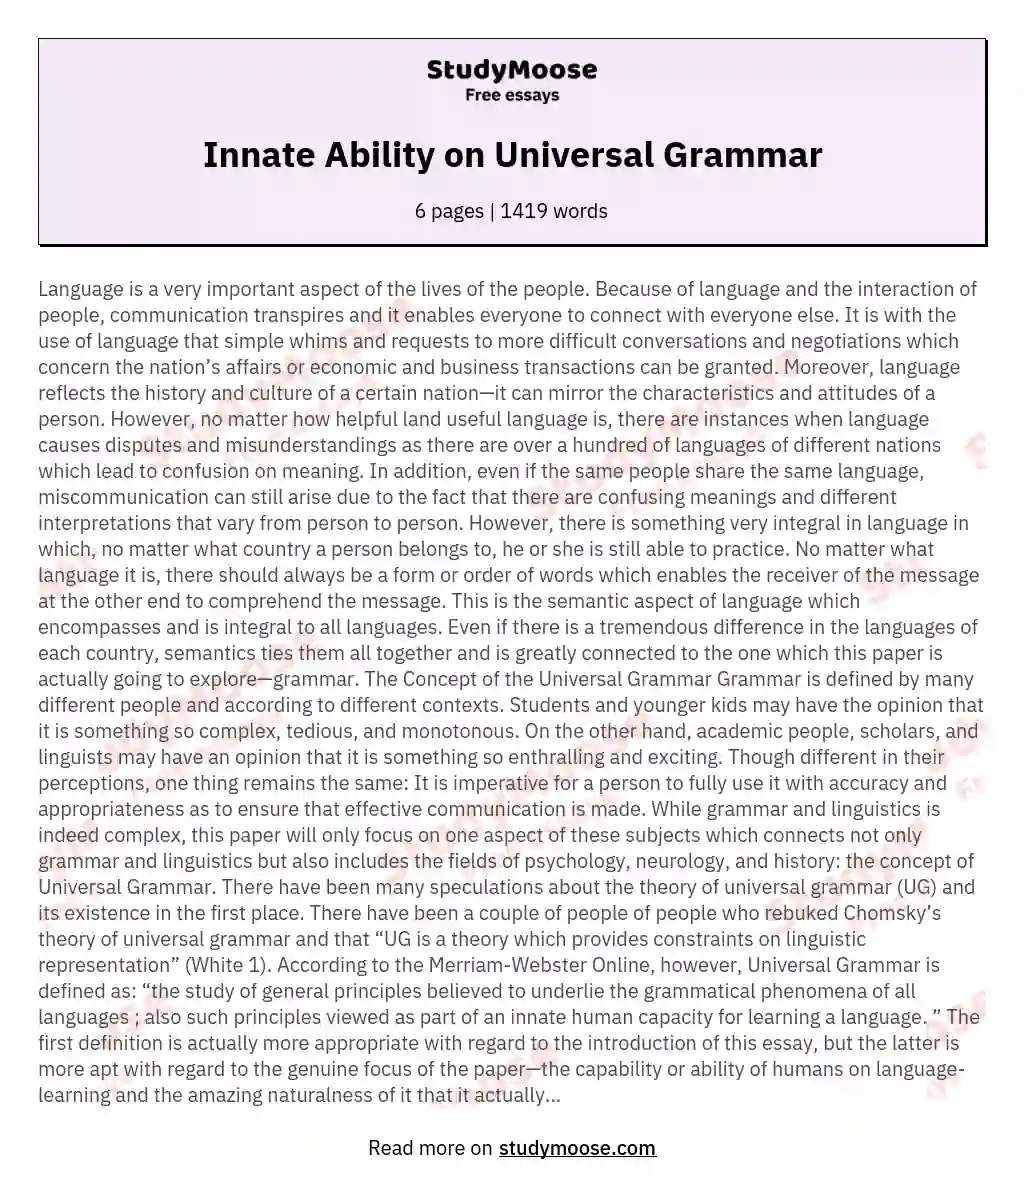 Innate Ability on Universal Grammar